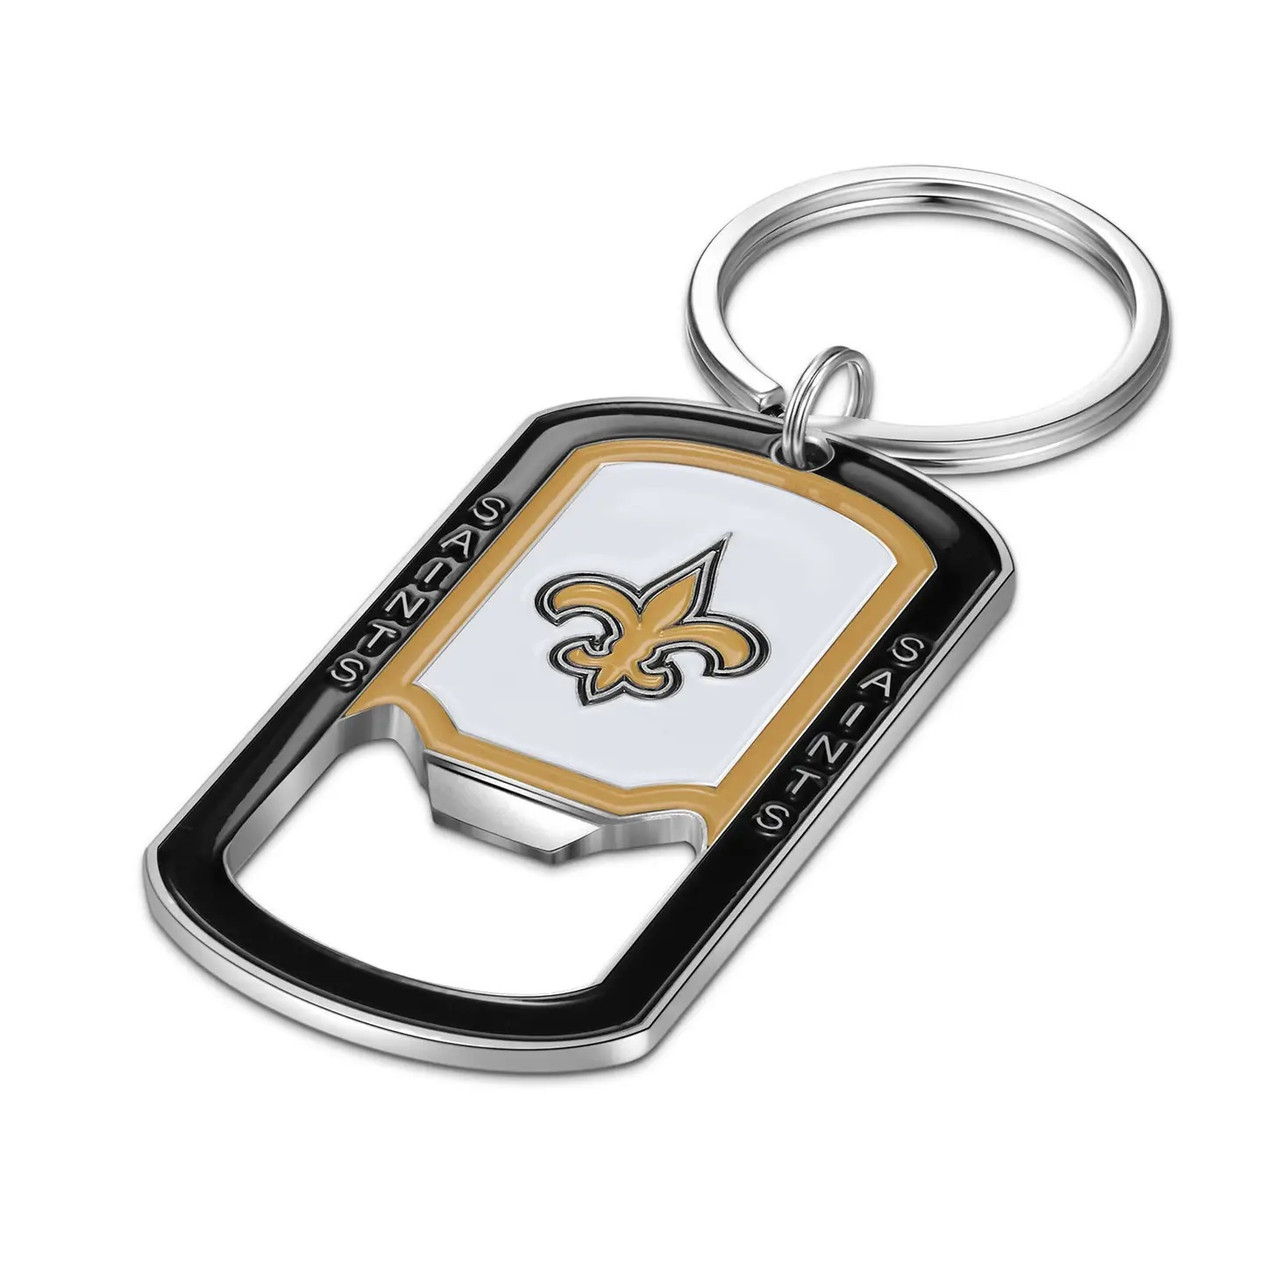 Simran Key Chains Team - New Orleans Saints Bottle Opener Key Chain